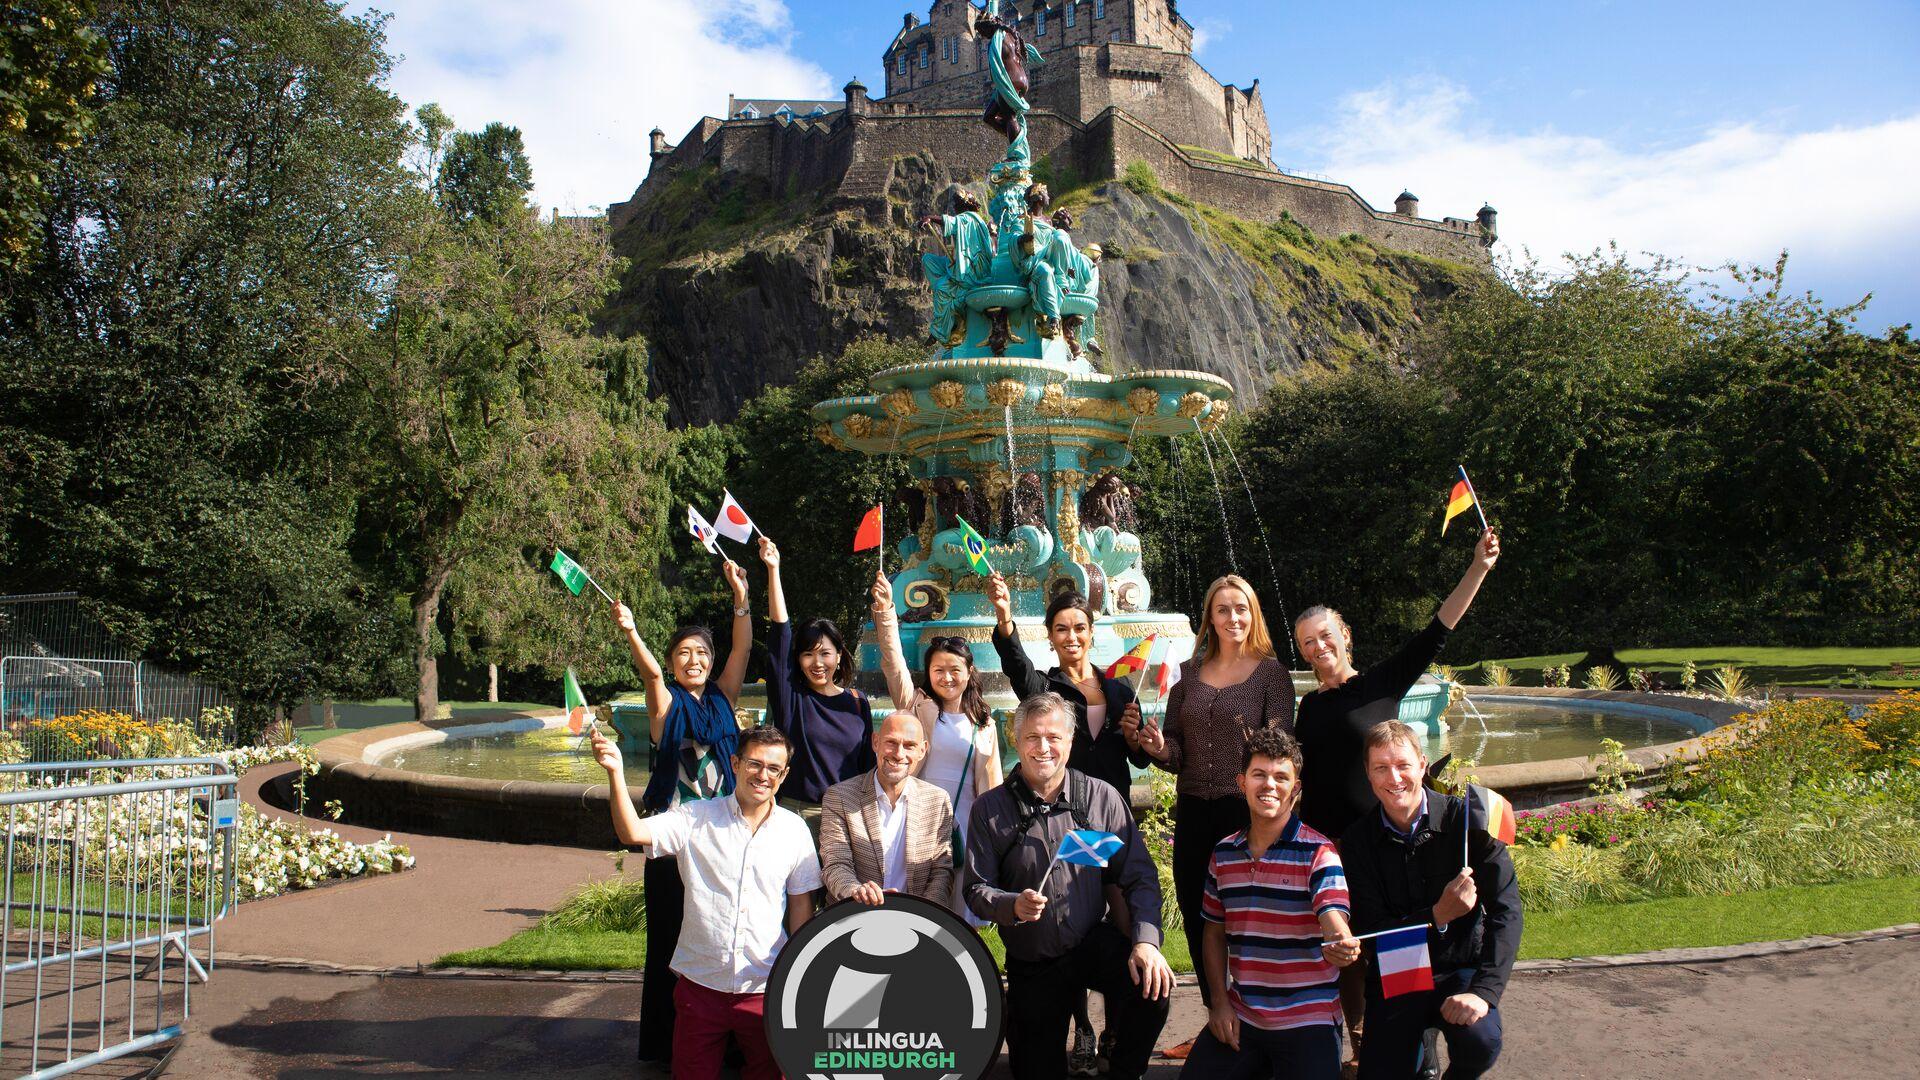 Séjour linguistique Angleterre, Edinburgh - Inlingua Edinburgh - Étudiants